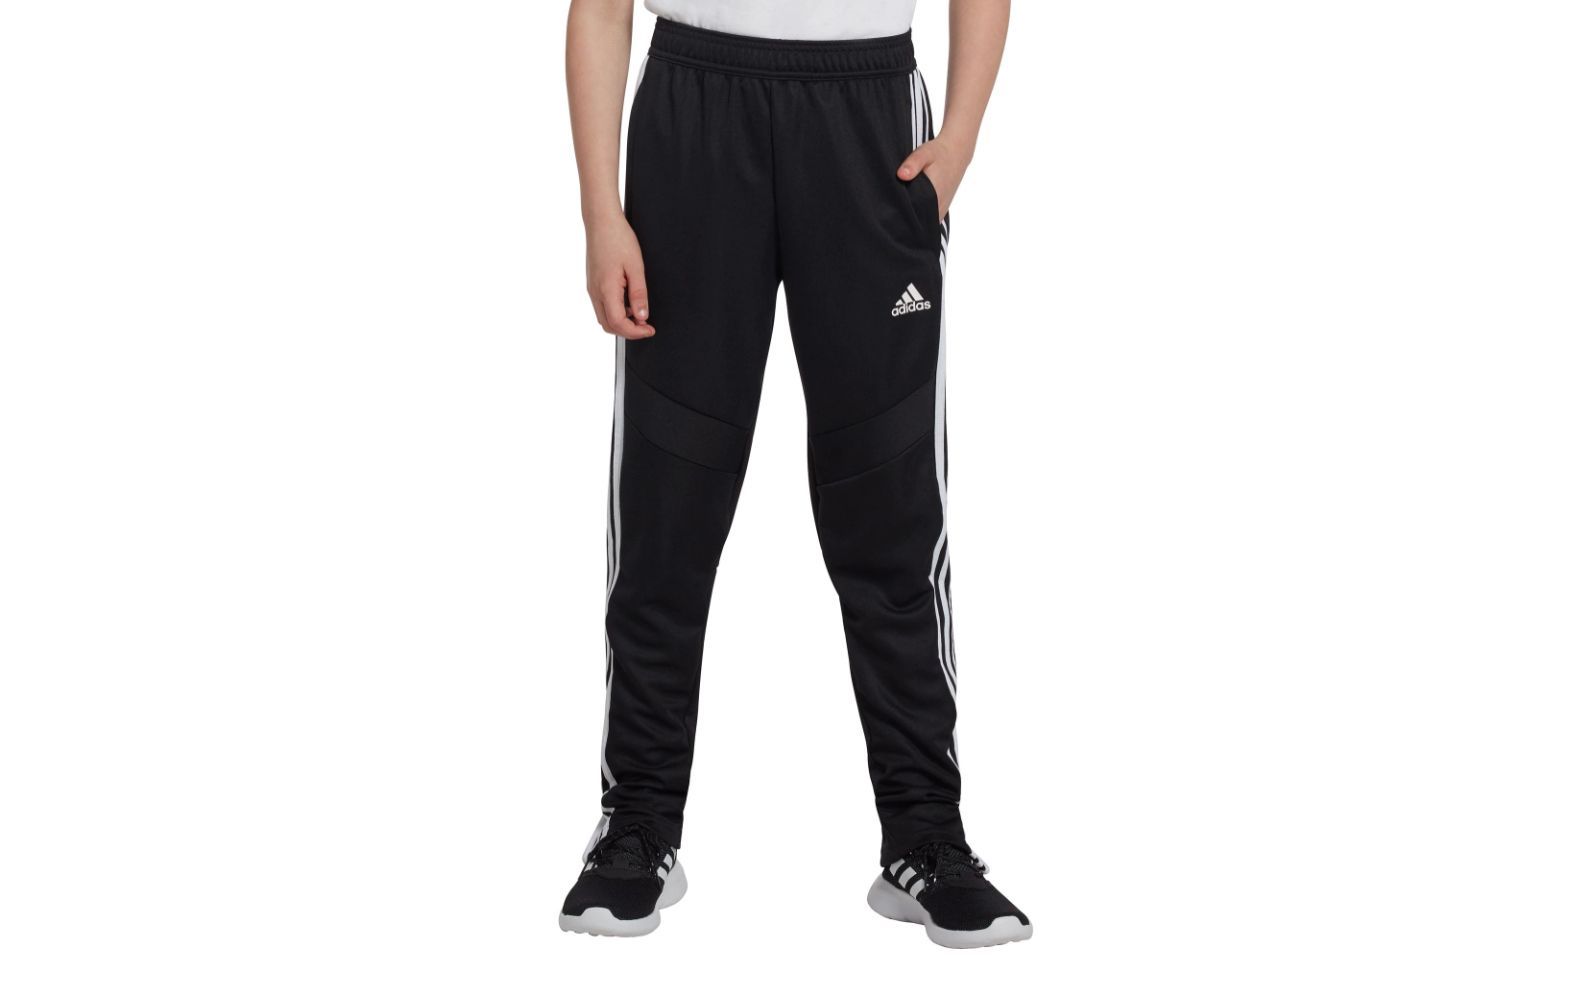 Adidas Boys’ Tiro 19 Training Pants